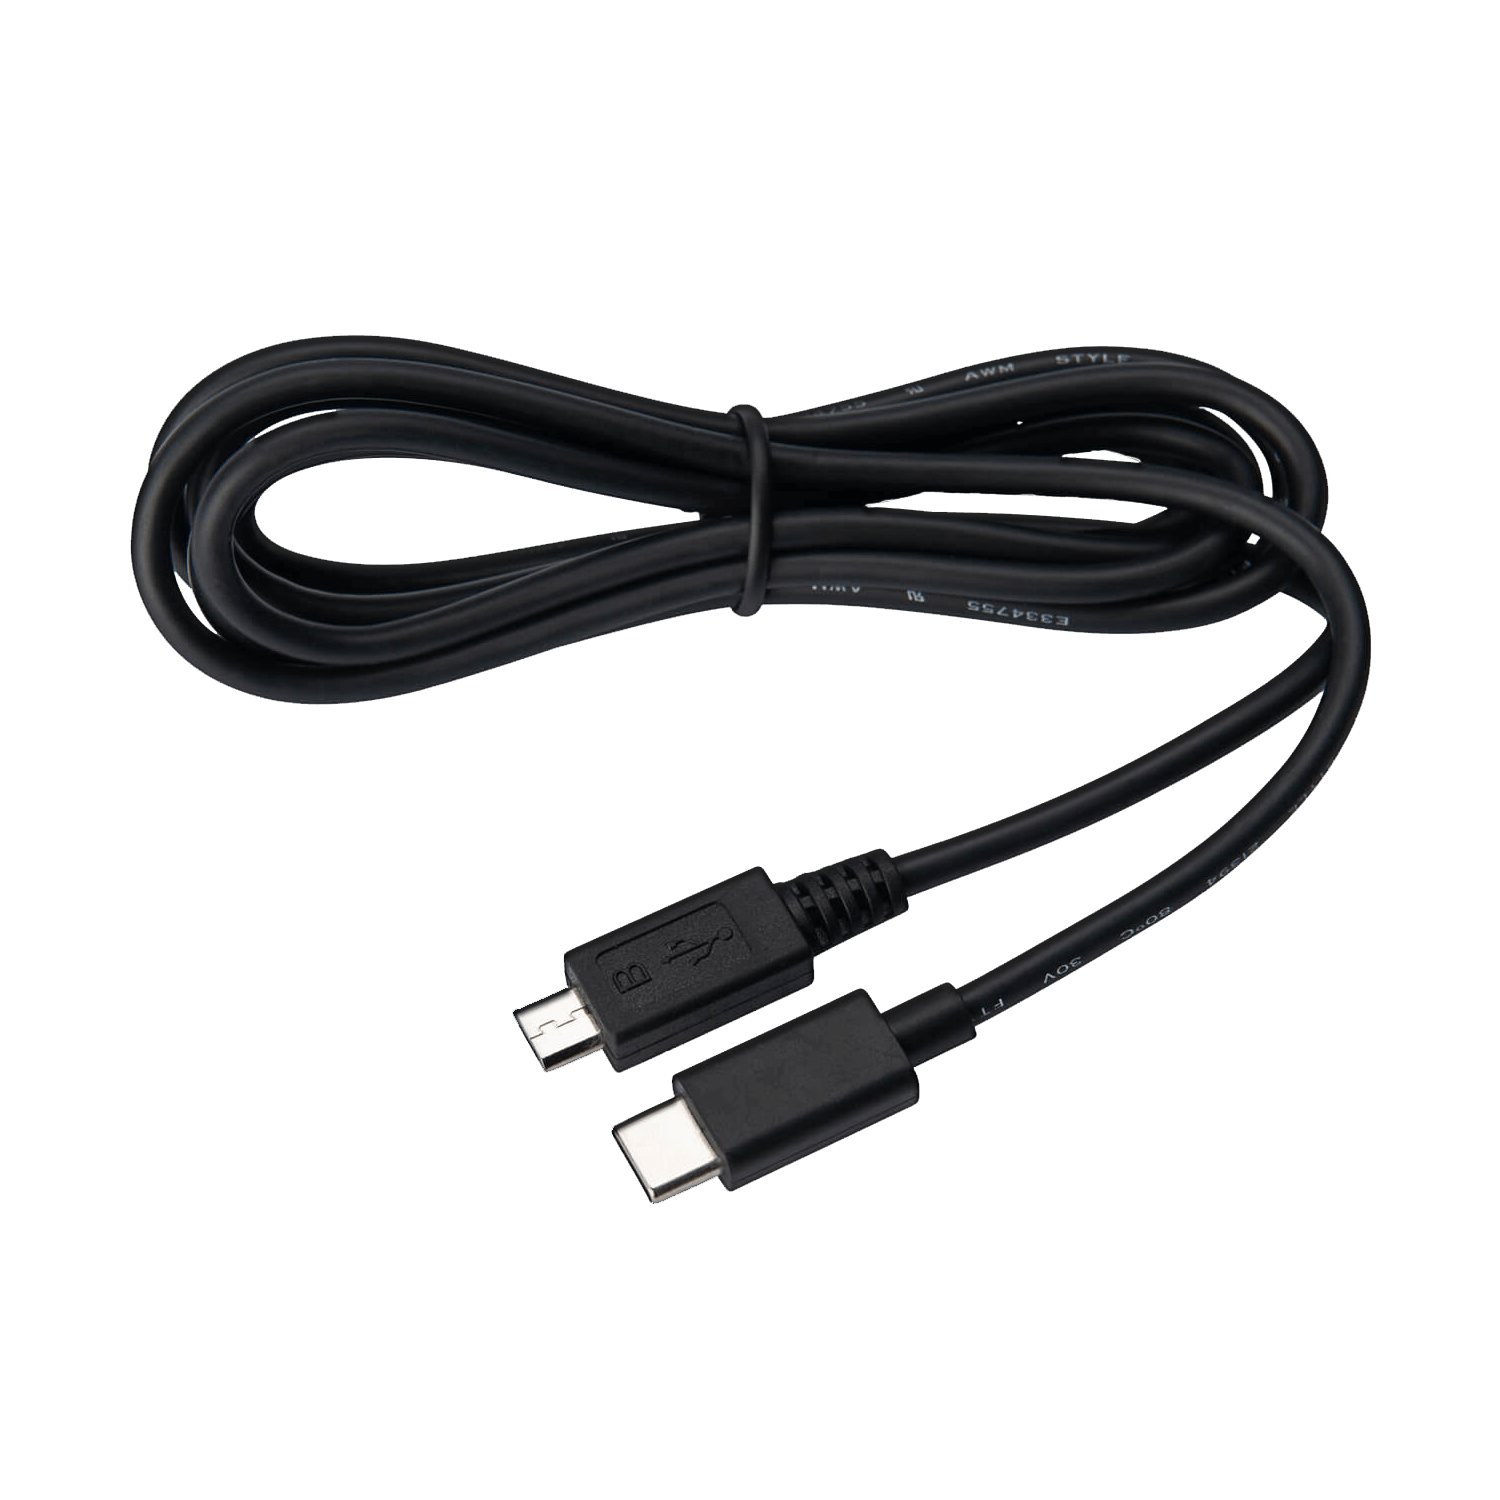 Jabra USB-C to Micro-USB Cable - Black